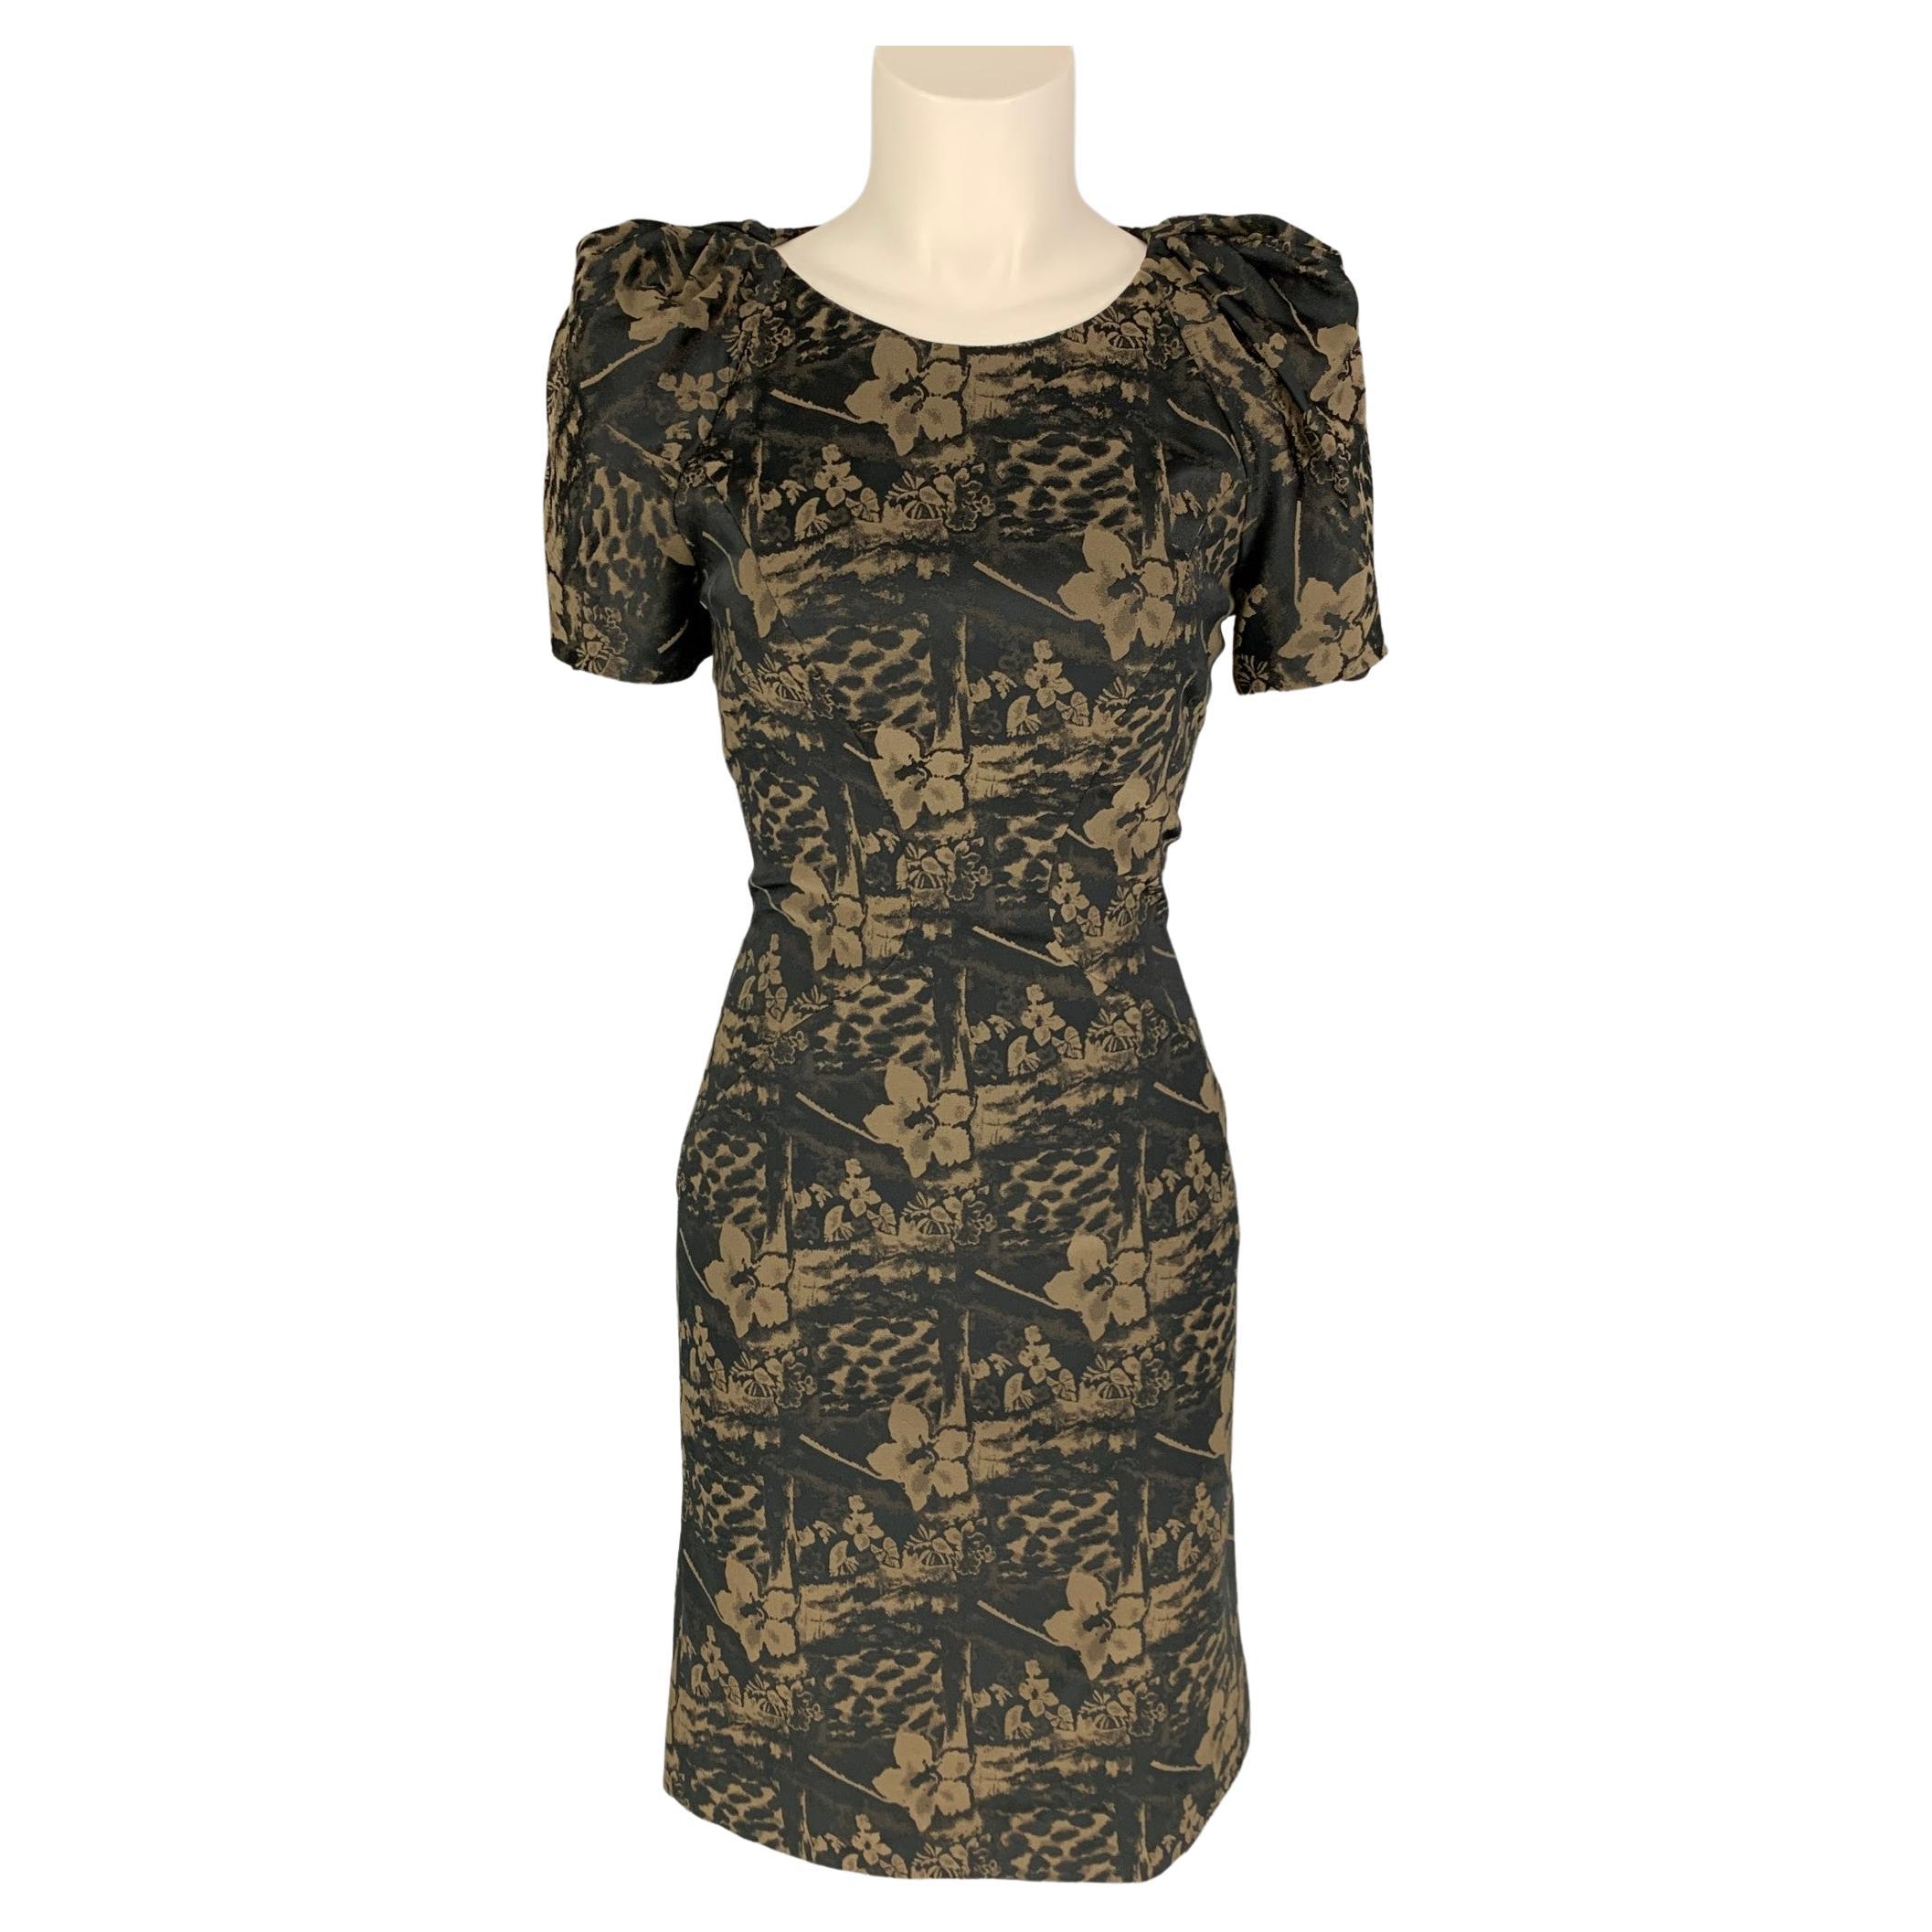 ZAC POSEN Size S Olive Black Floral Short Sleeve Dress